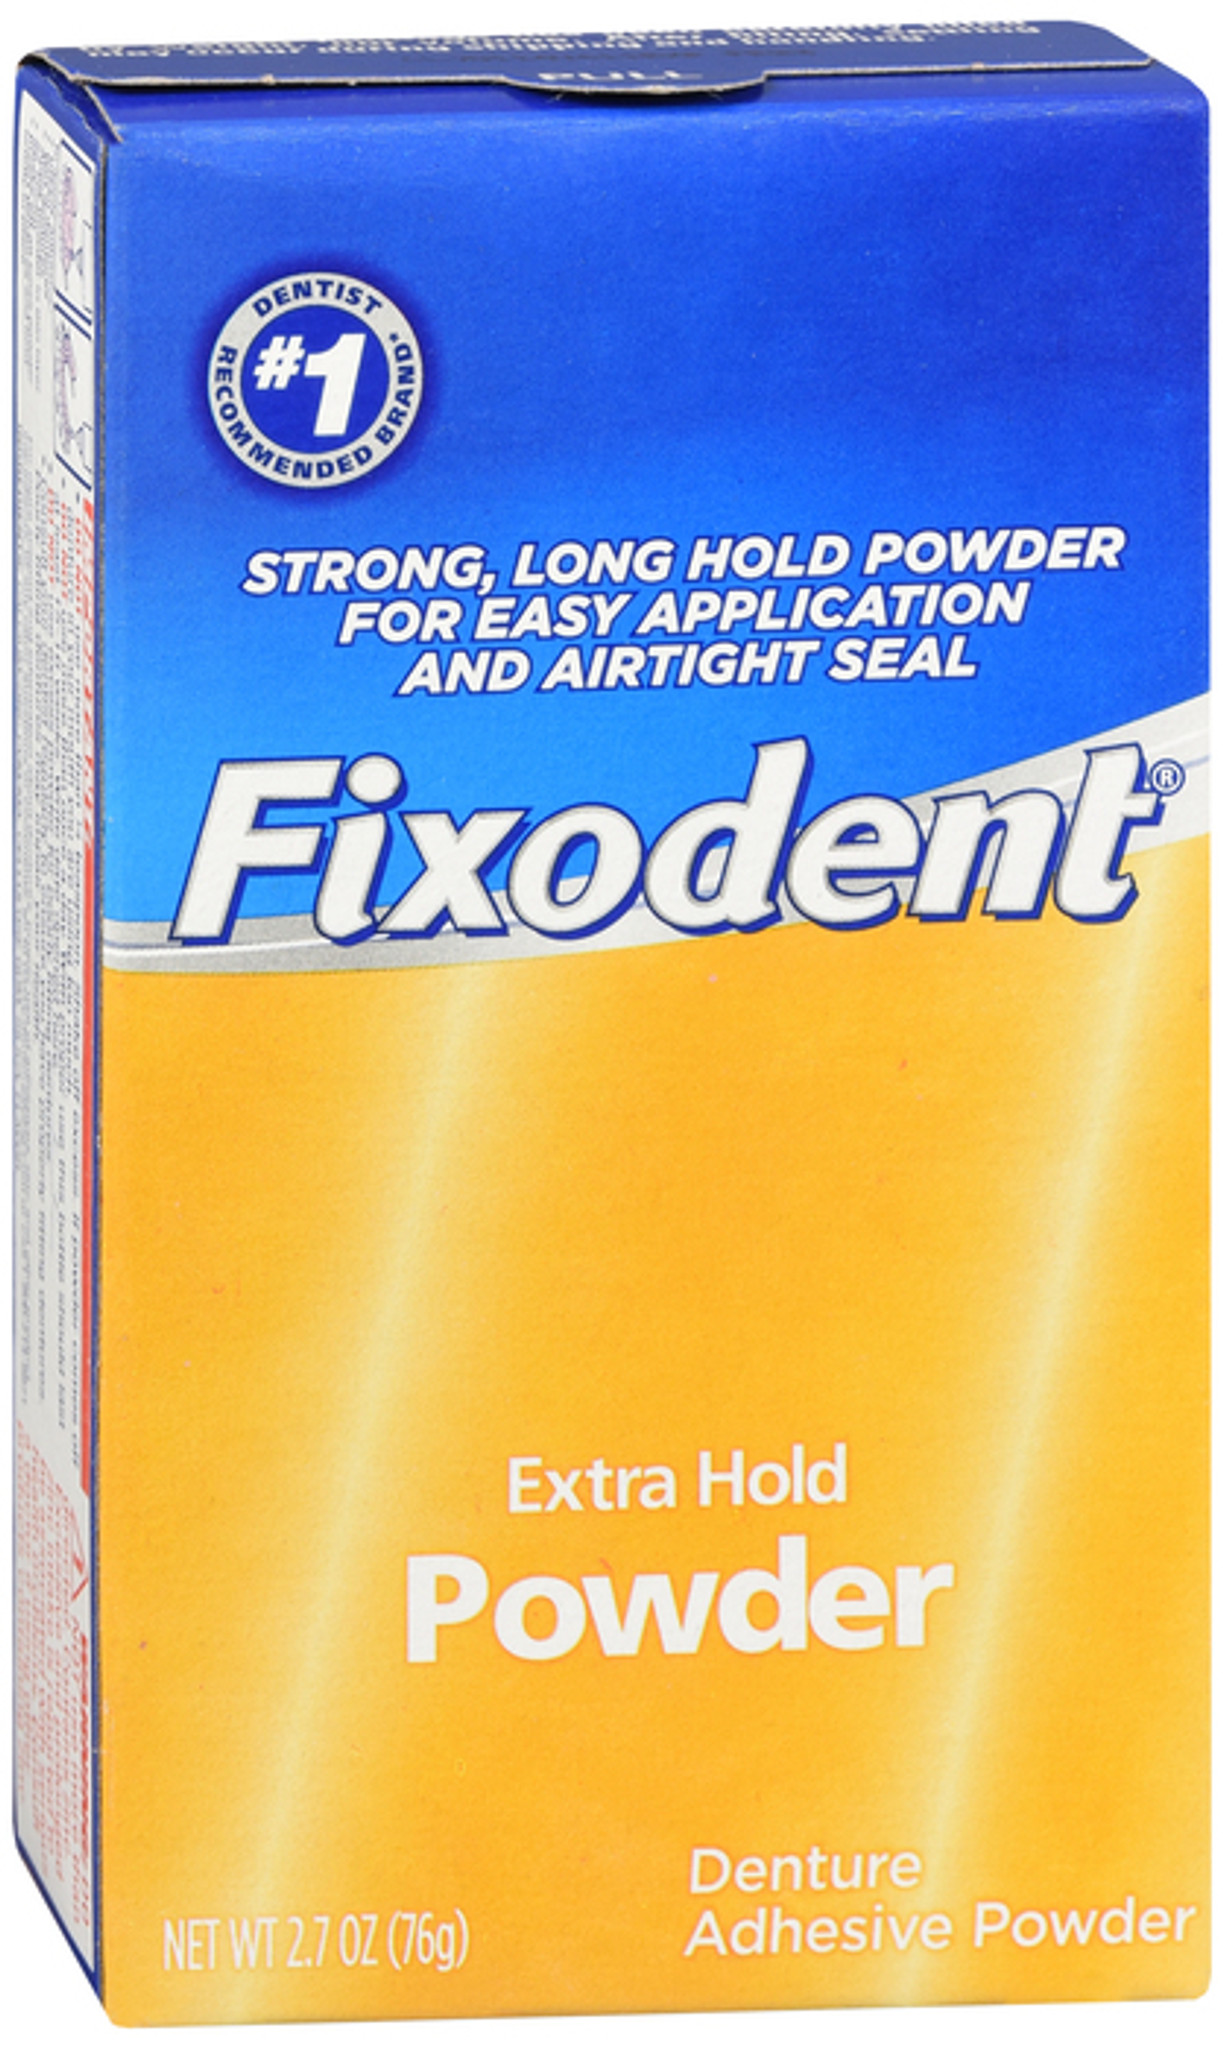 Extra Strong & Long Hold Denture Adhesive Powder